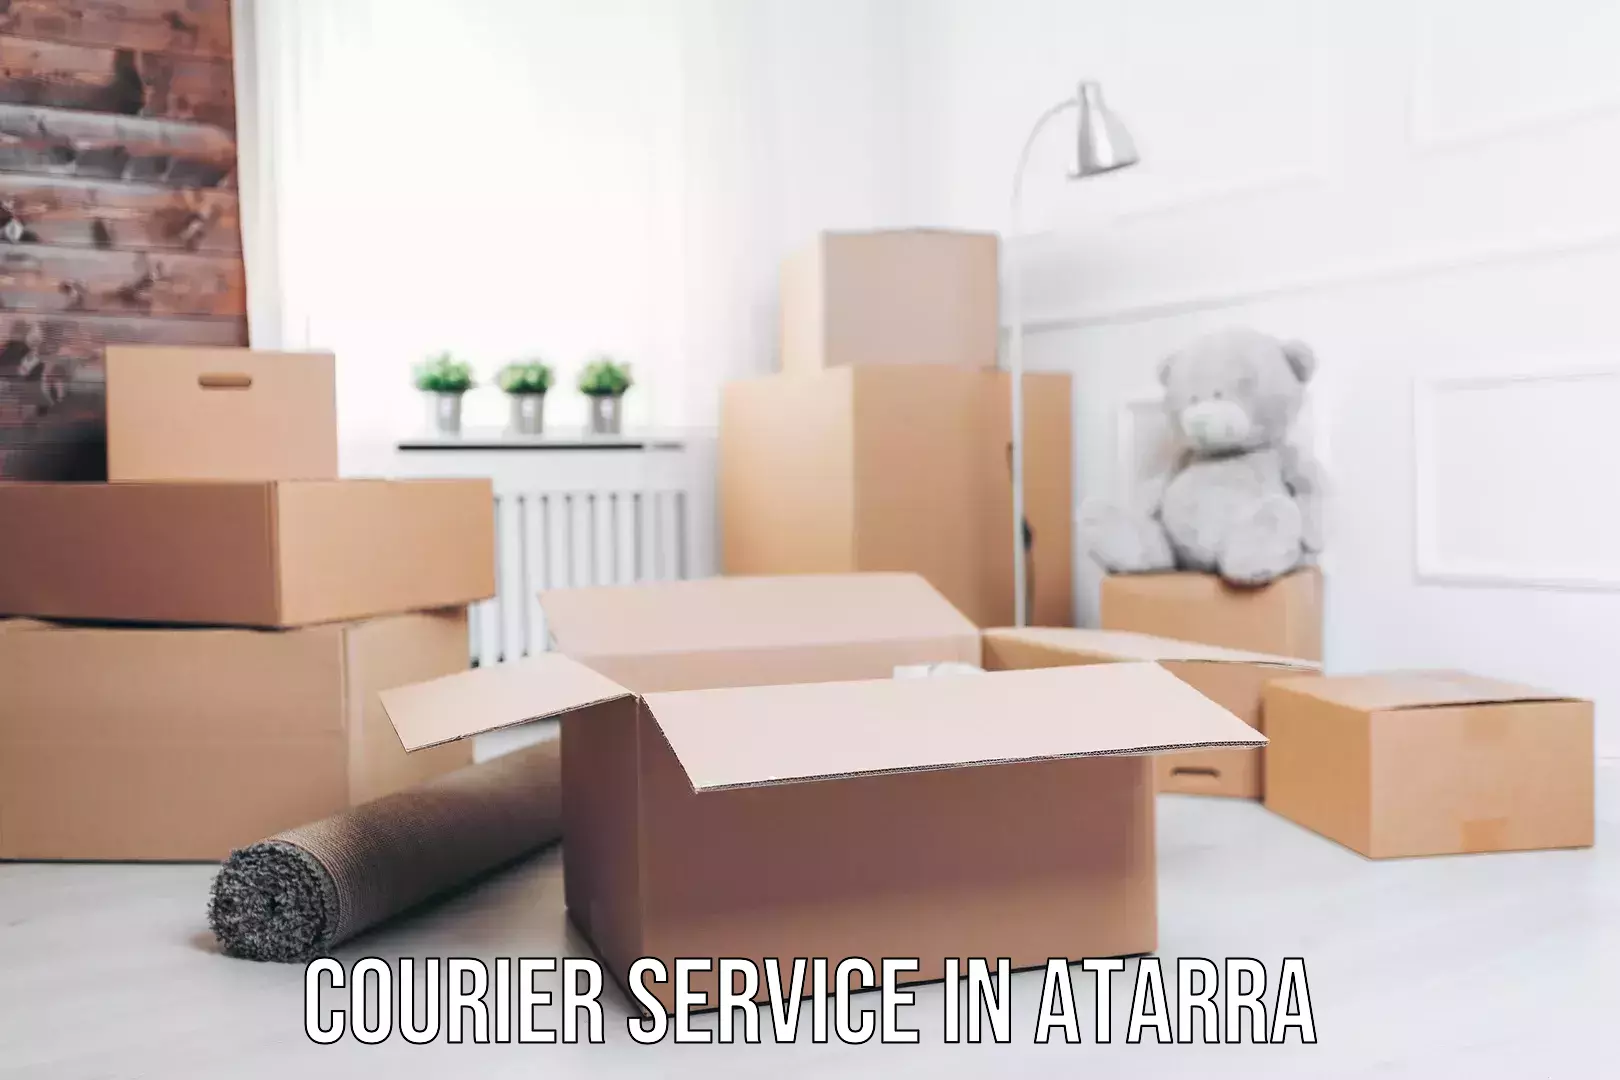 Return courier service in Atarra